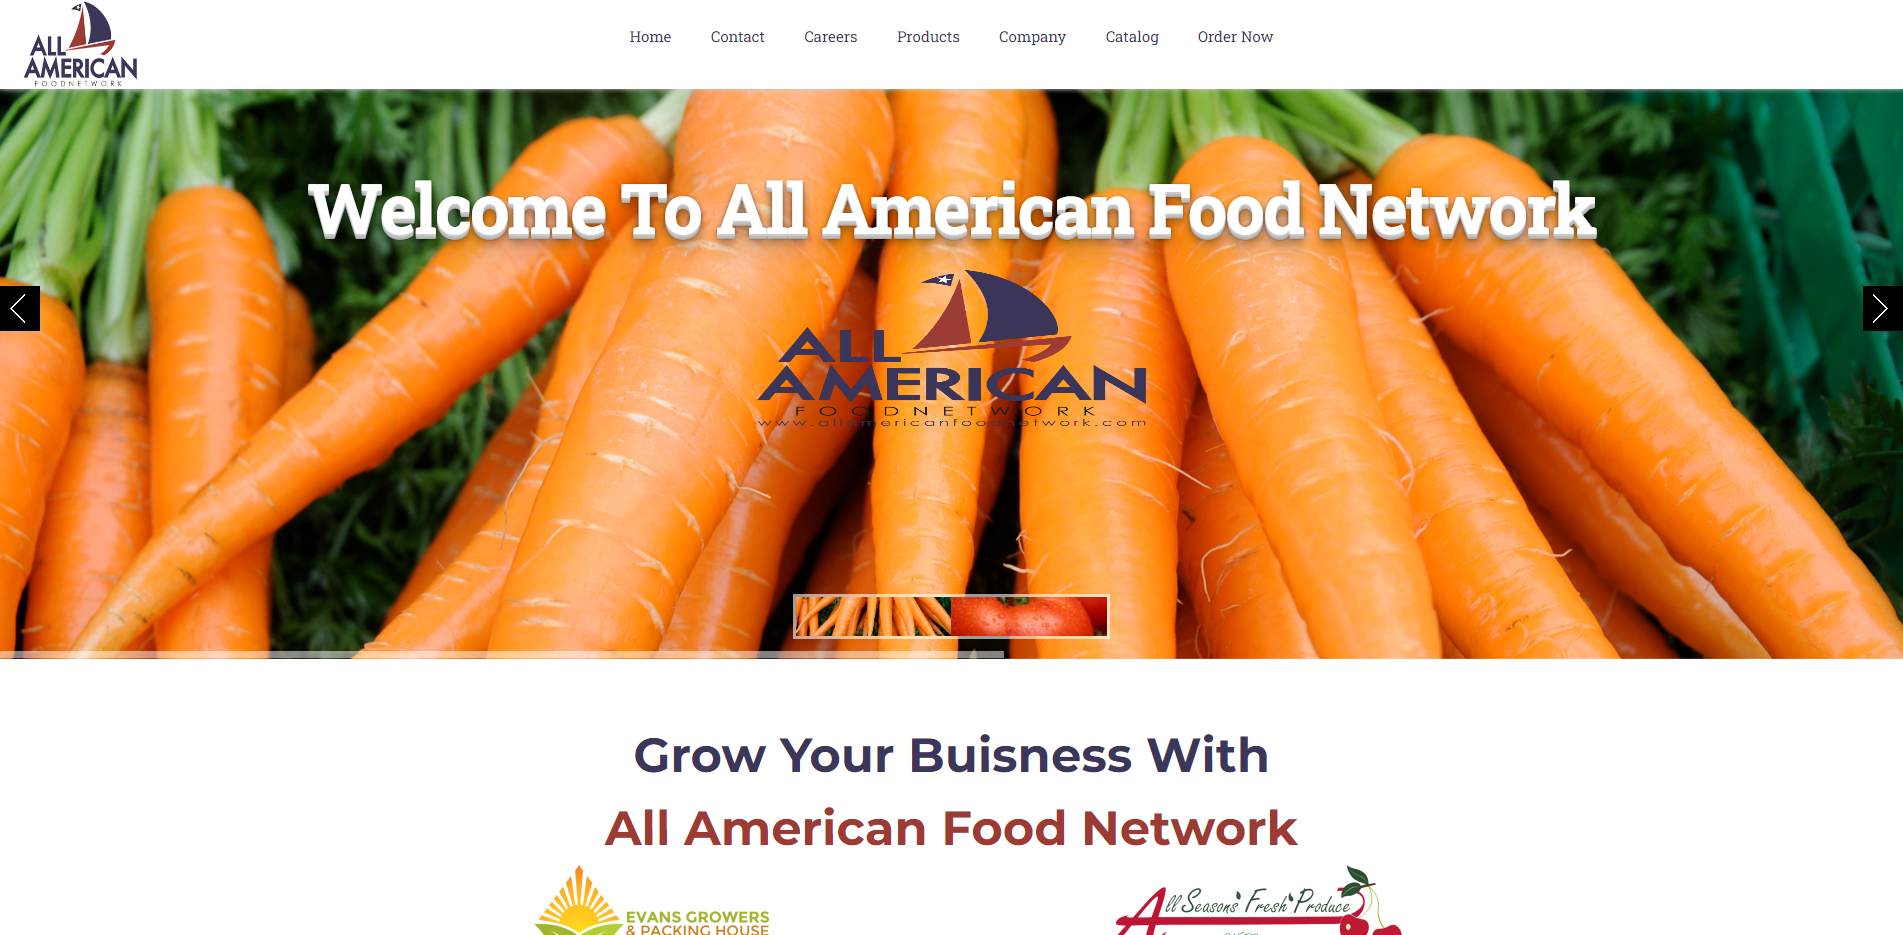 All American Food Network website